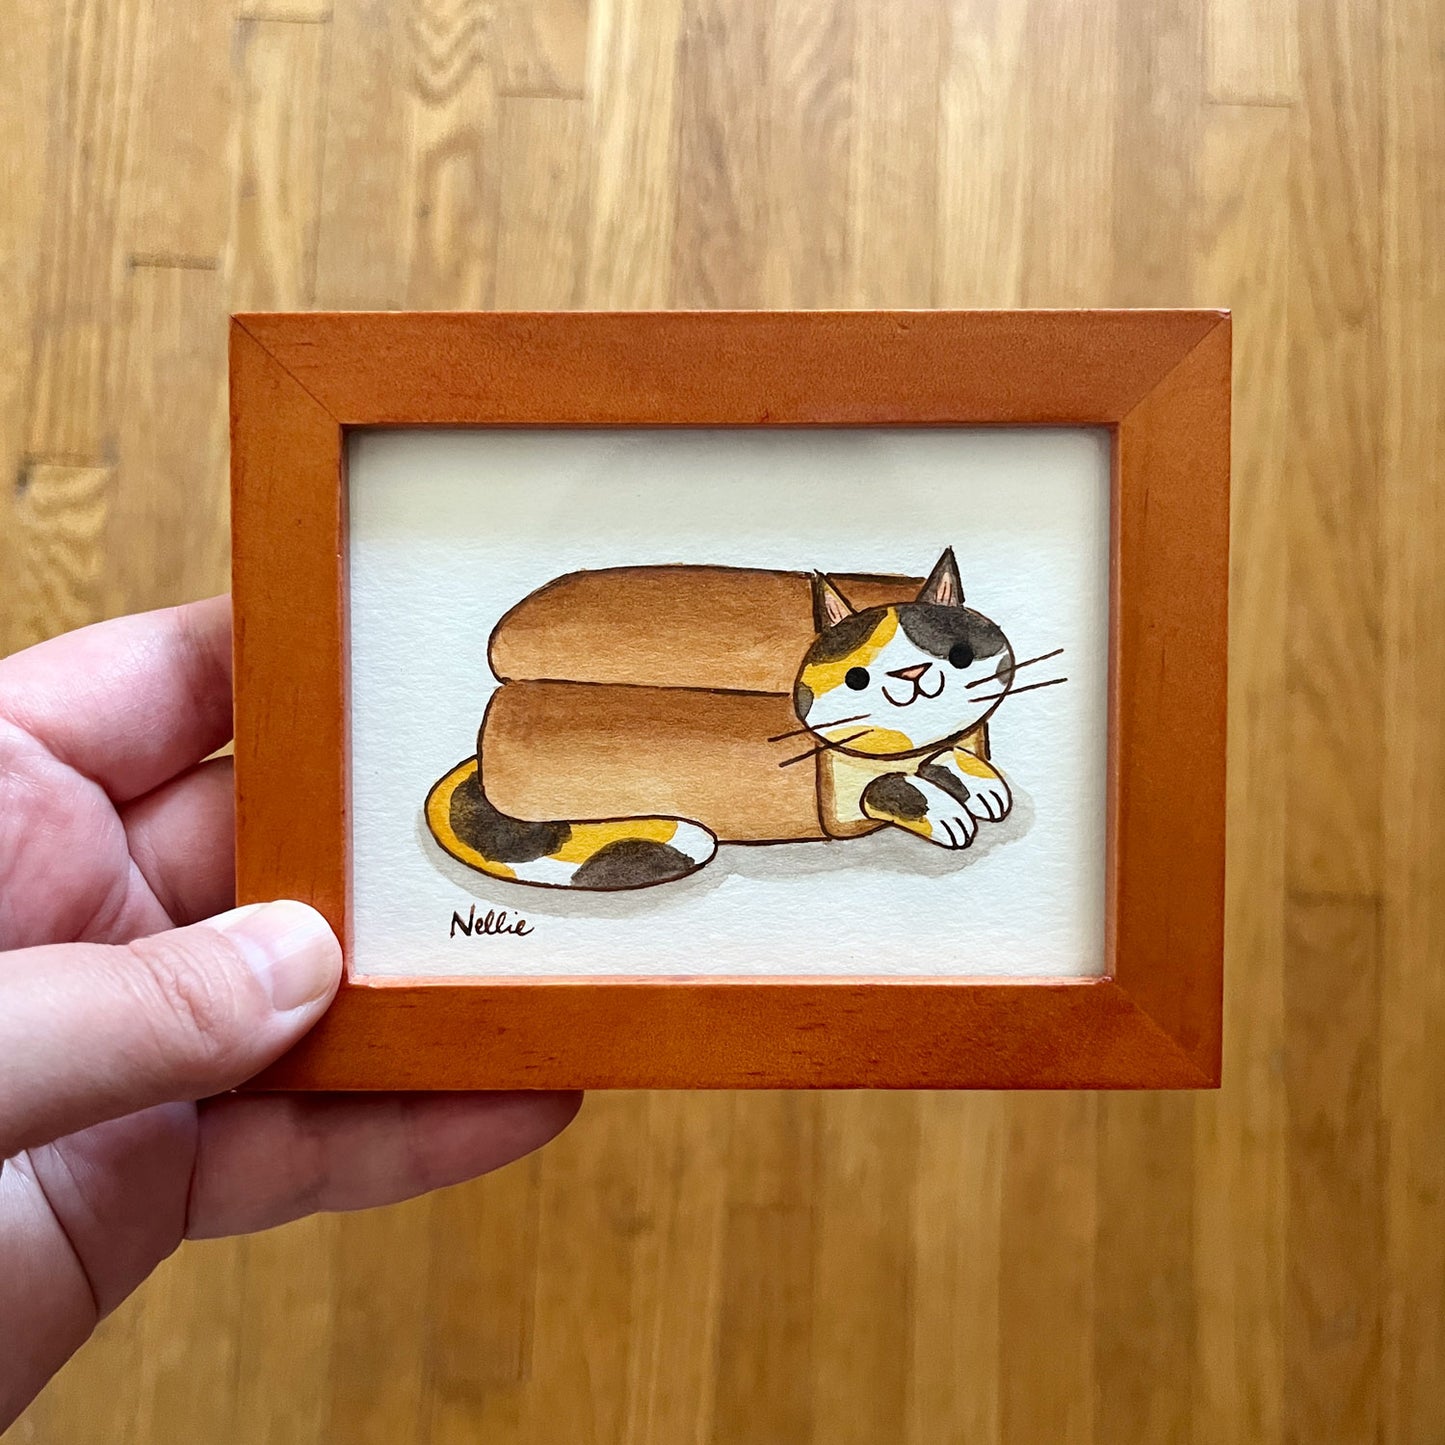 Bread Loaf Cat (Calico Cat) - Mini Painting